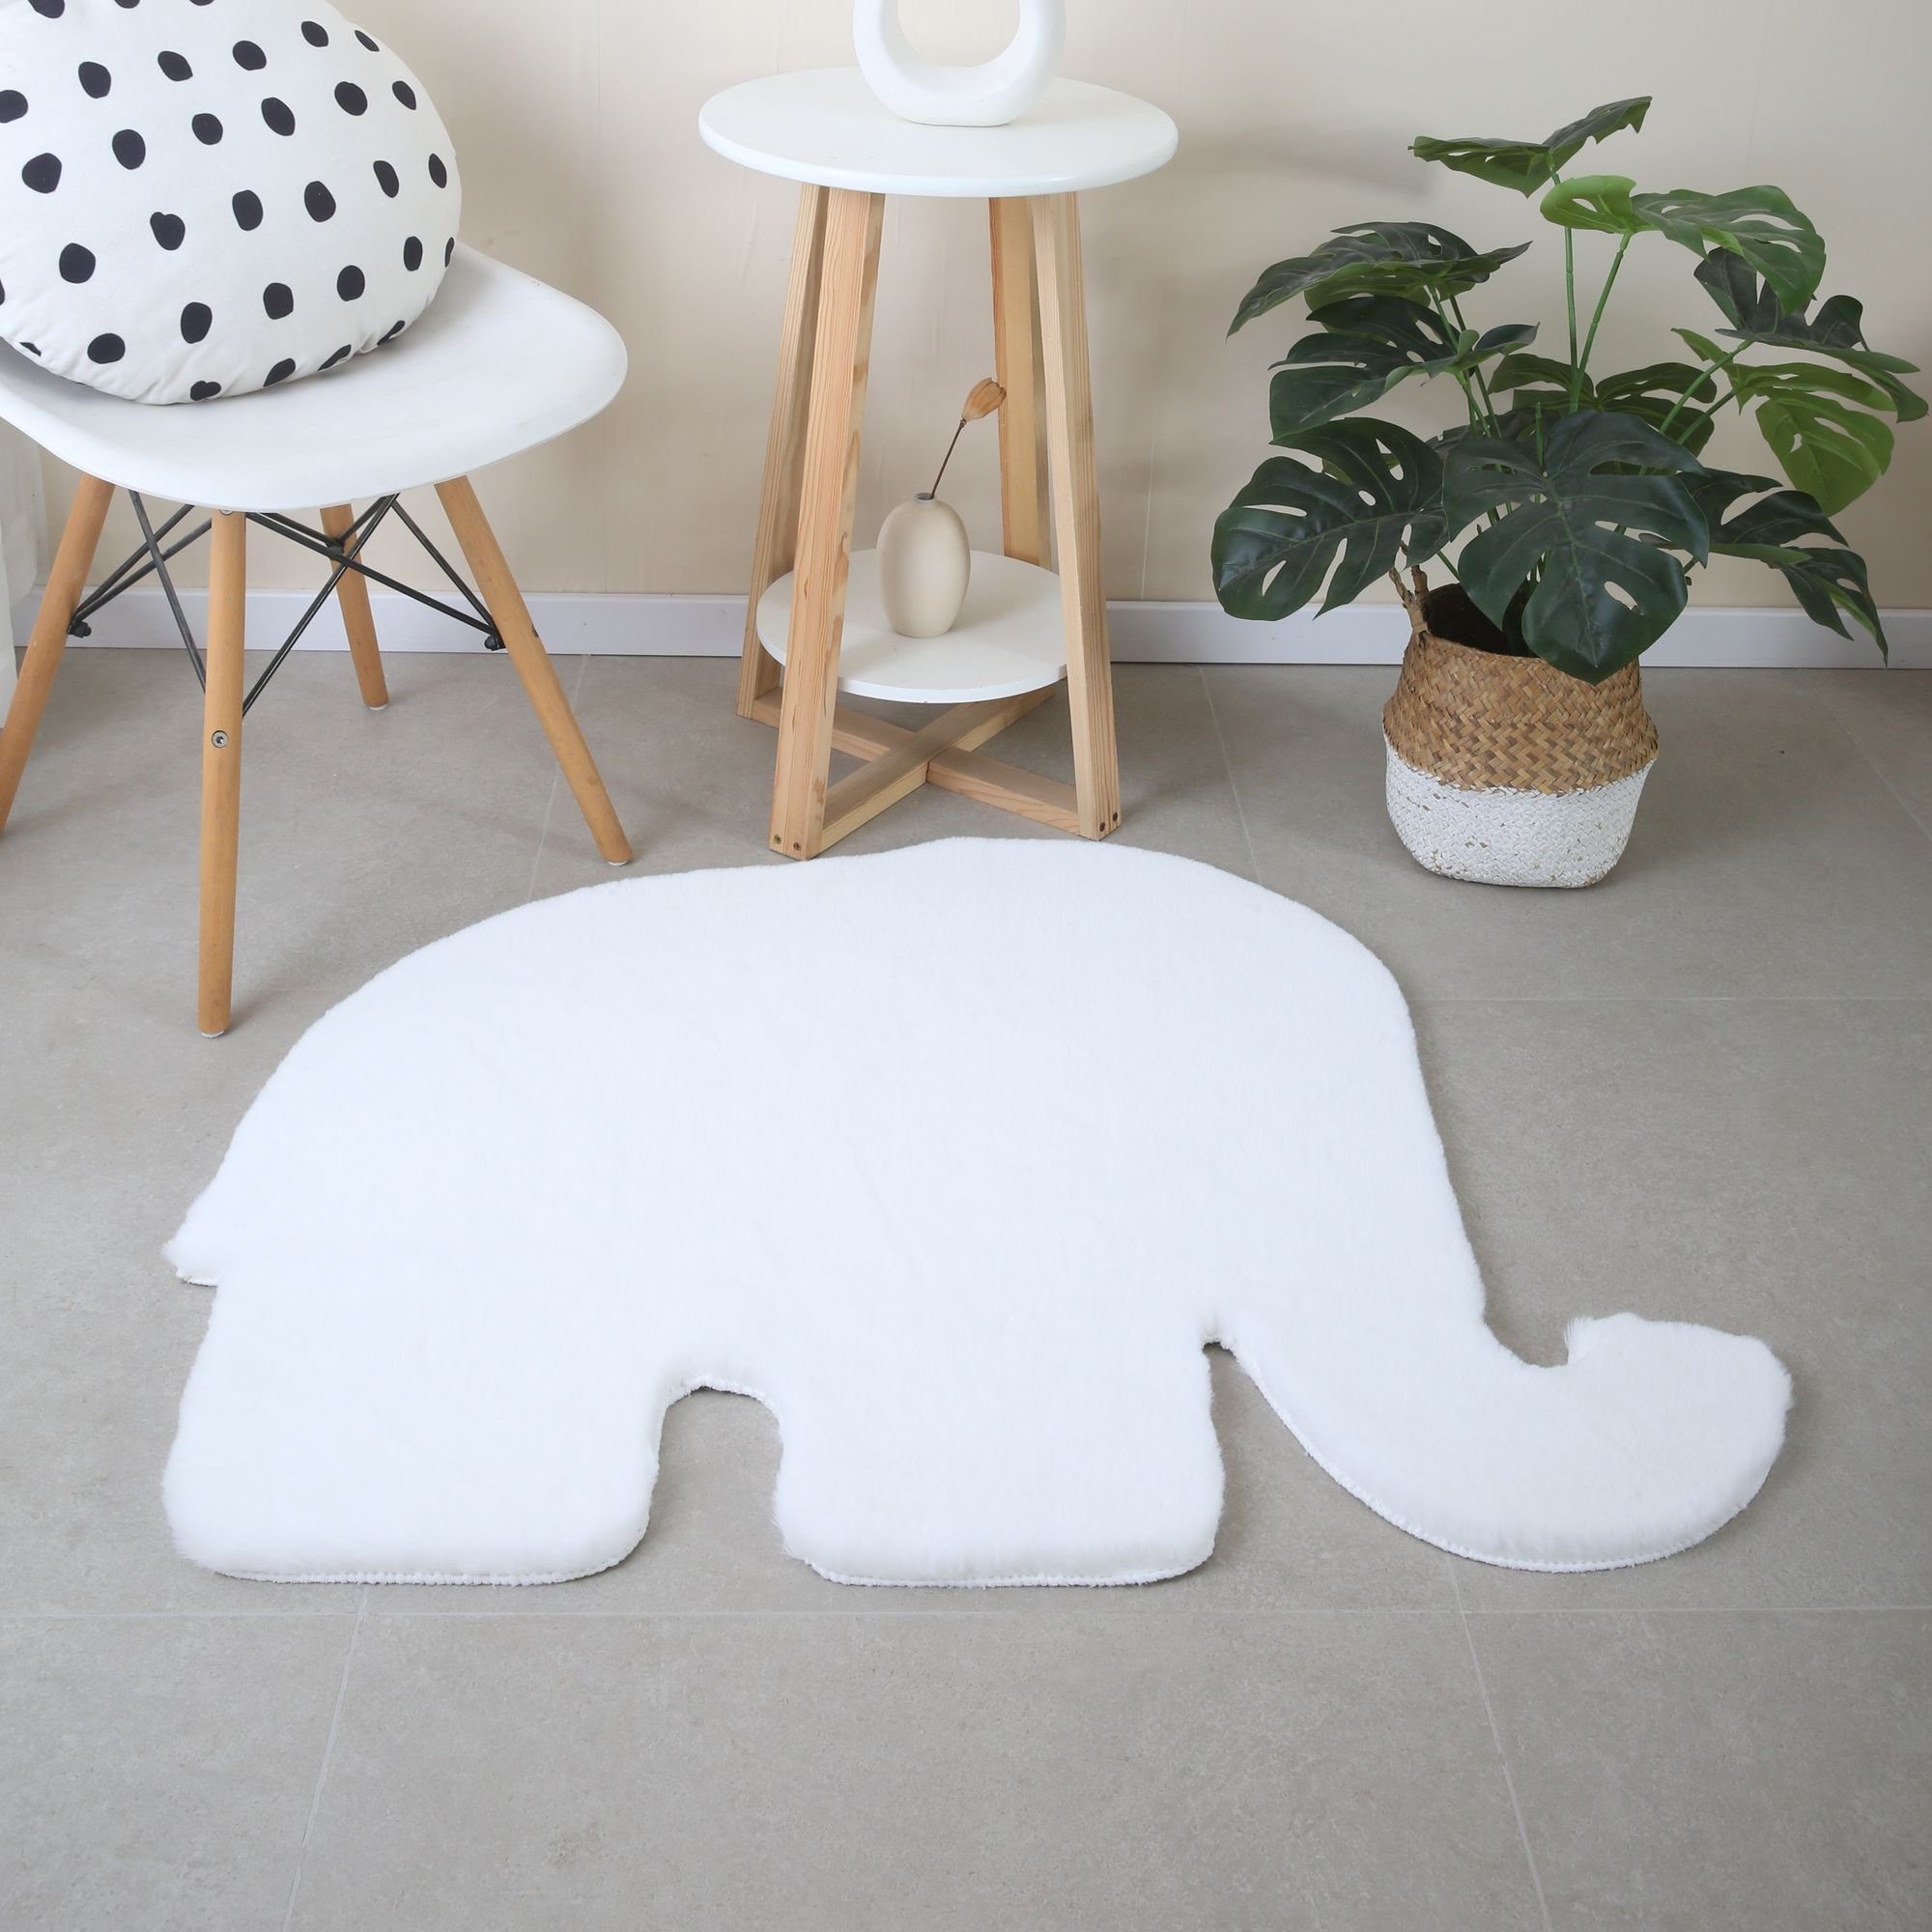 Fellteppich Elefant Form, Carpetsale24, Läufer, Höhe: 25 mm, Teppich Plüsch Einfarbig Elefantenform Kunstfell Kinderzimmer Weiß